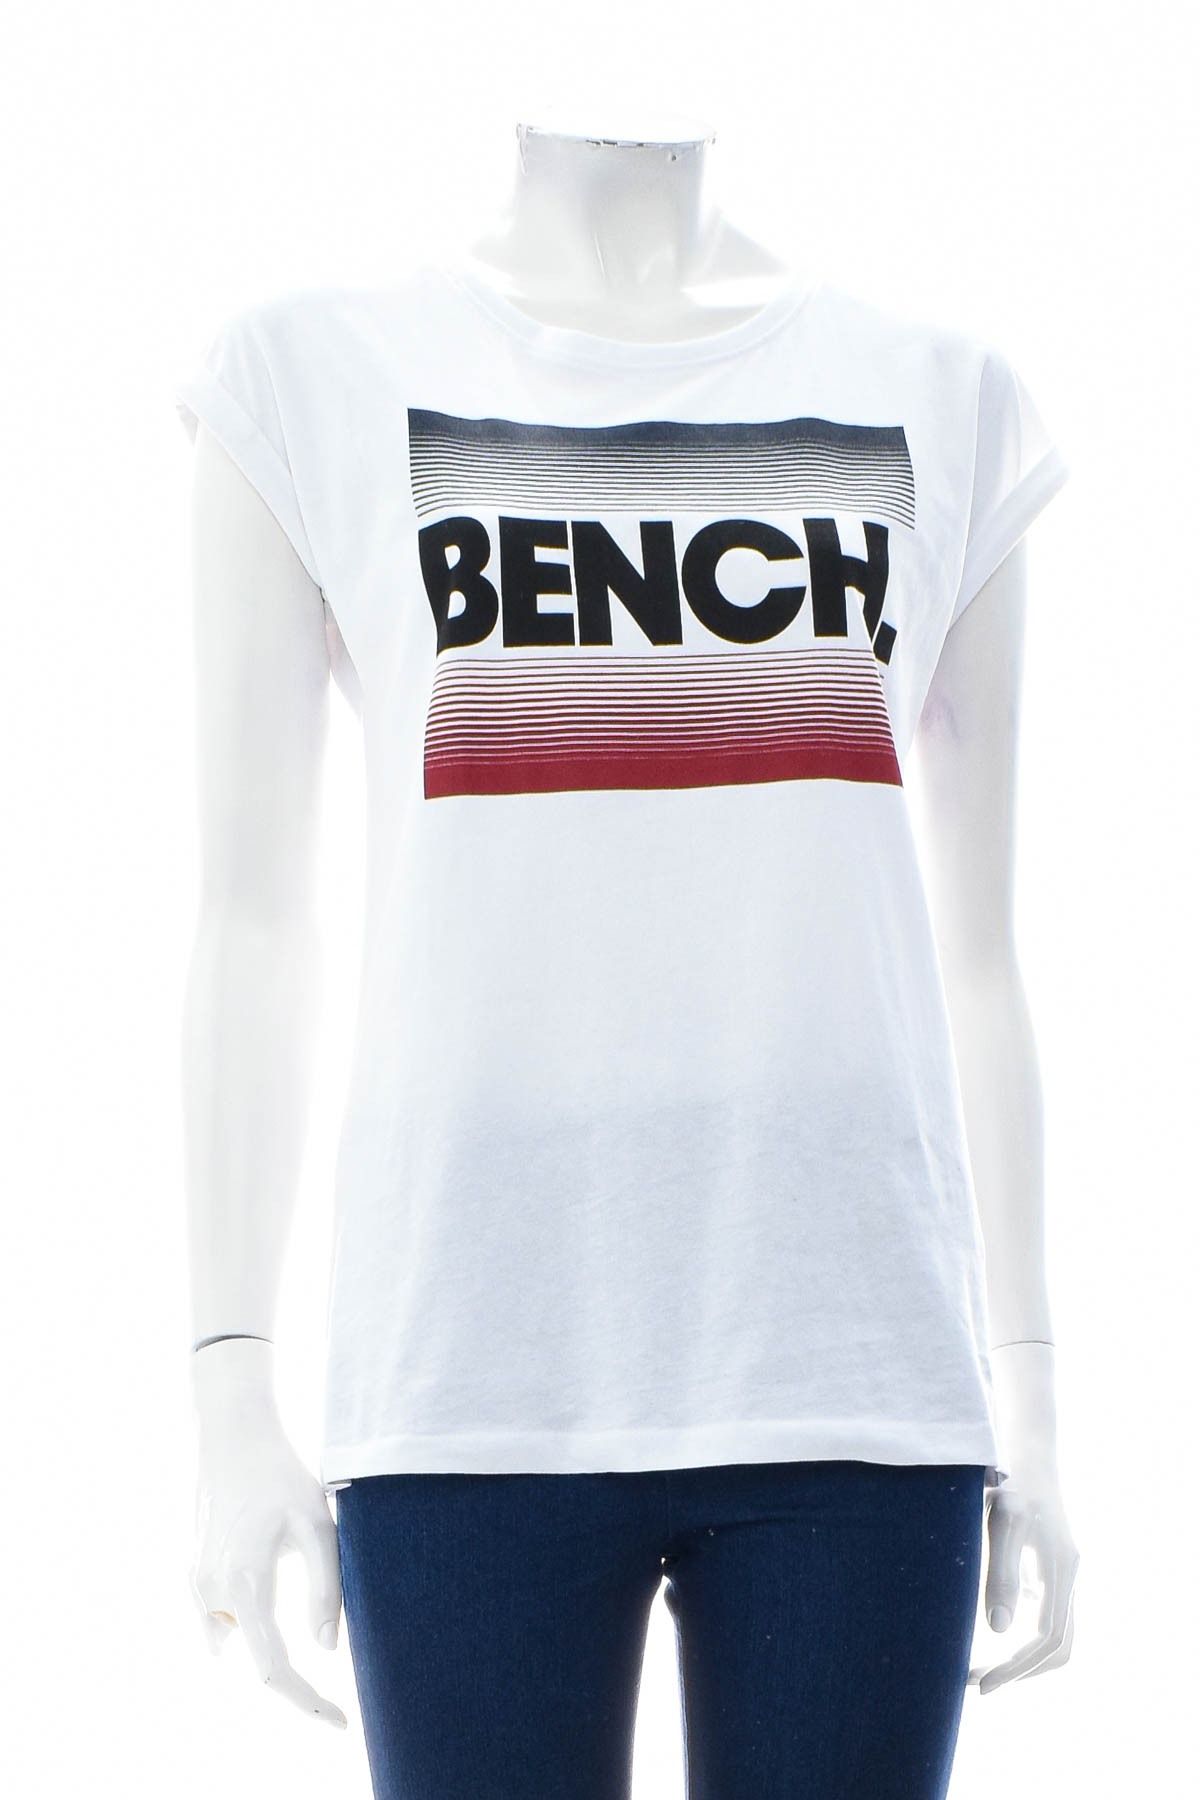 Girls' t-shirt - Bench. - 0